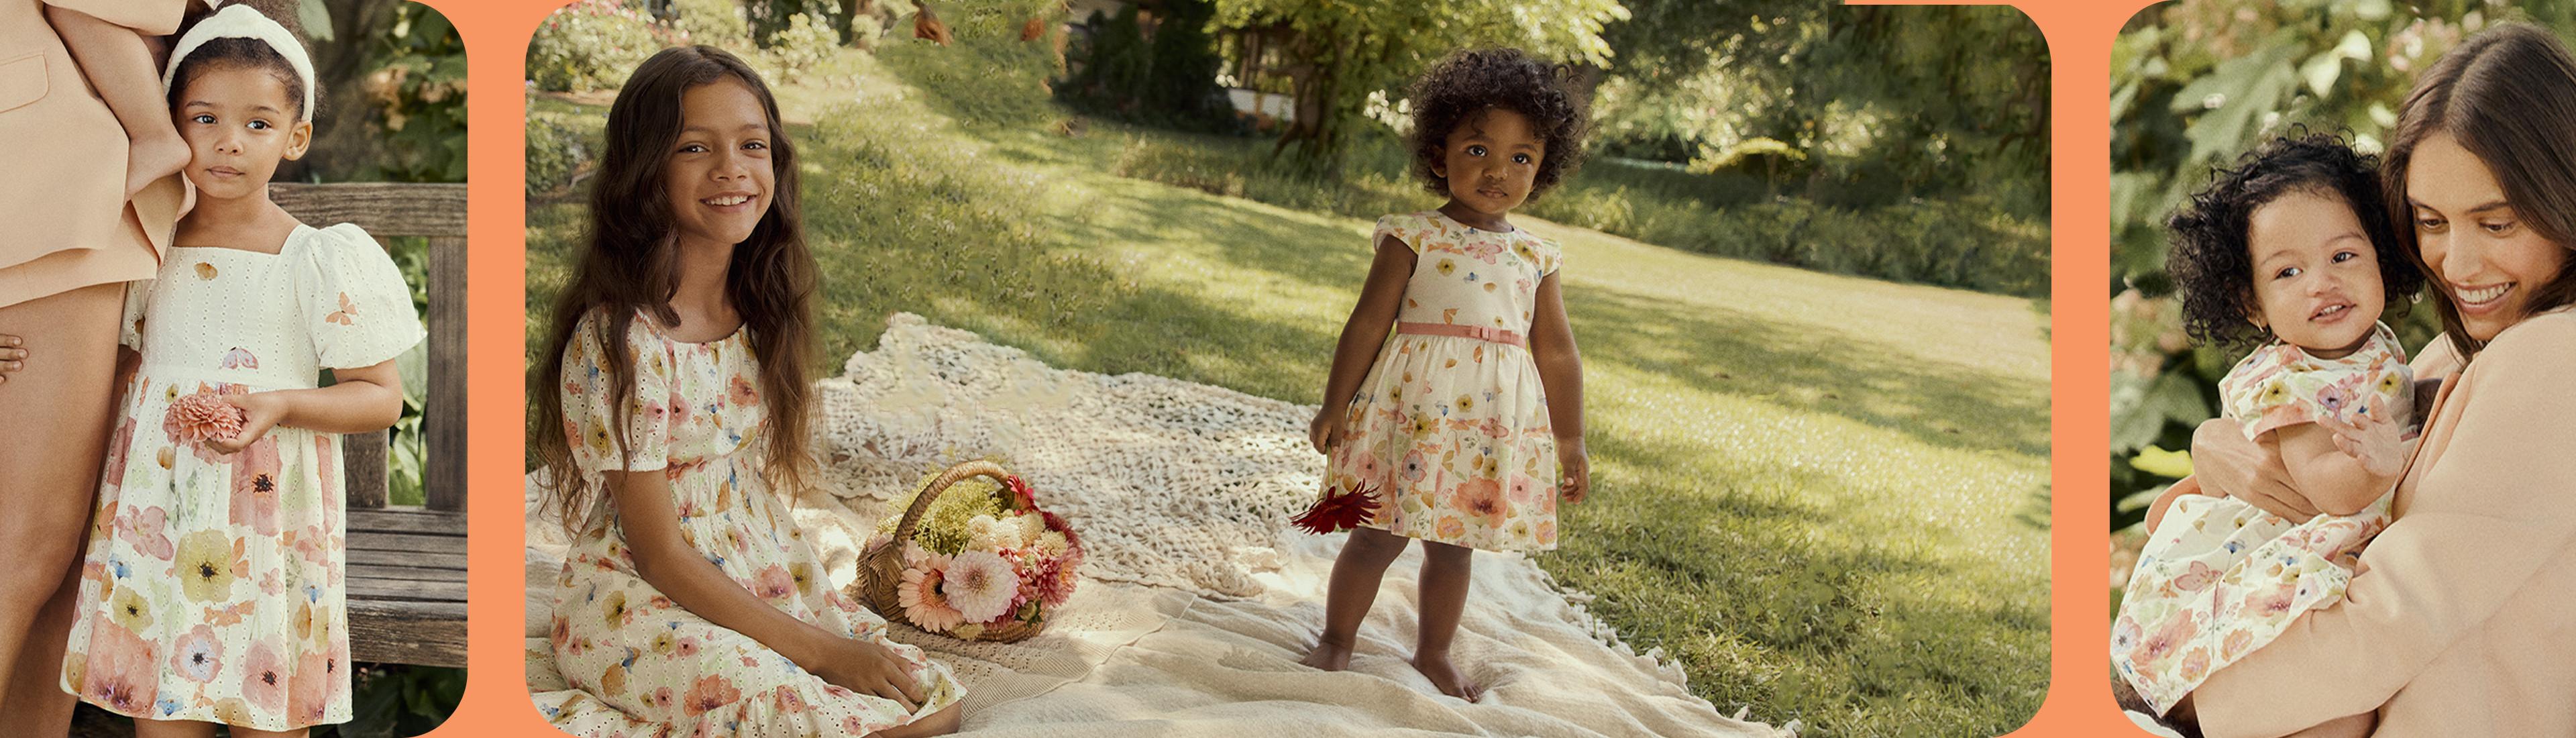 Babies in floral summer dresses